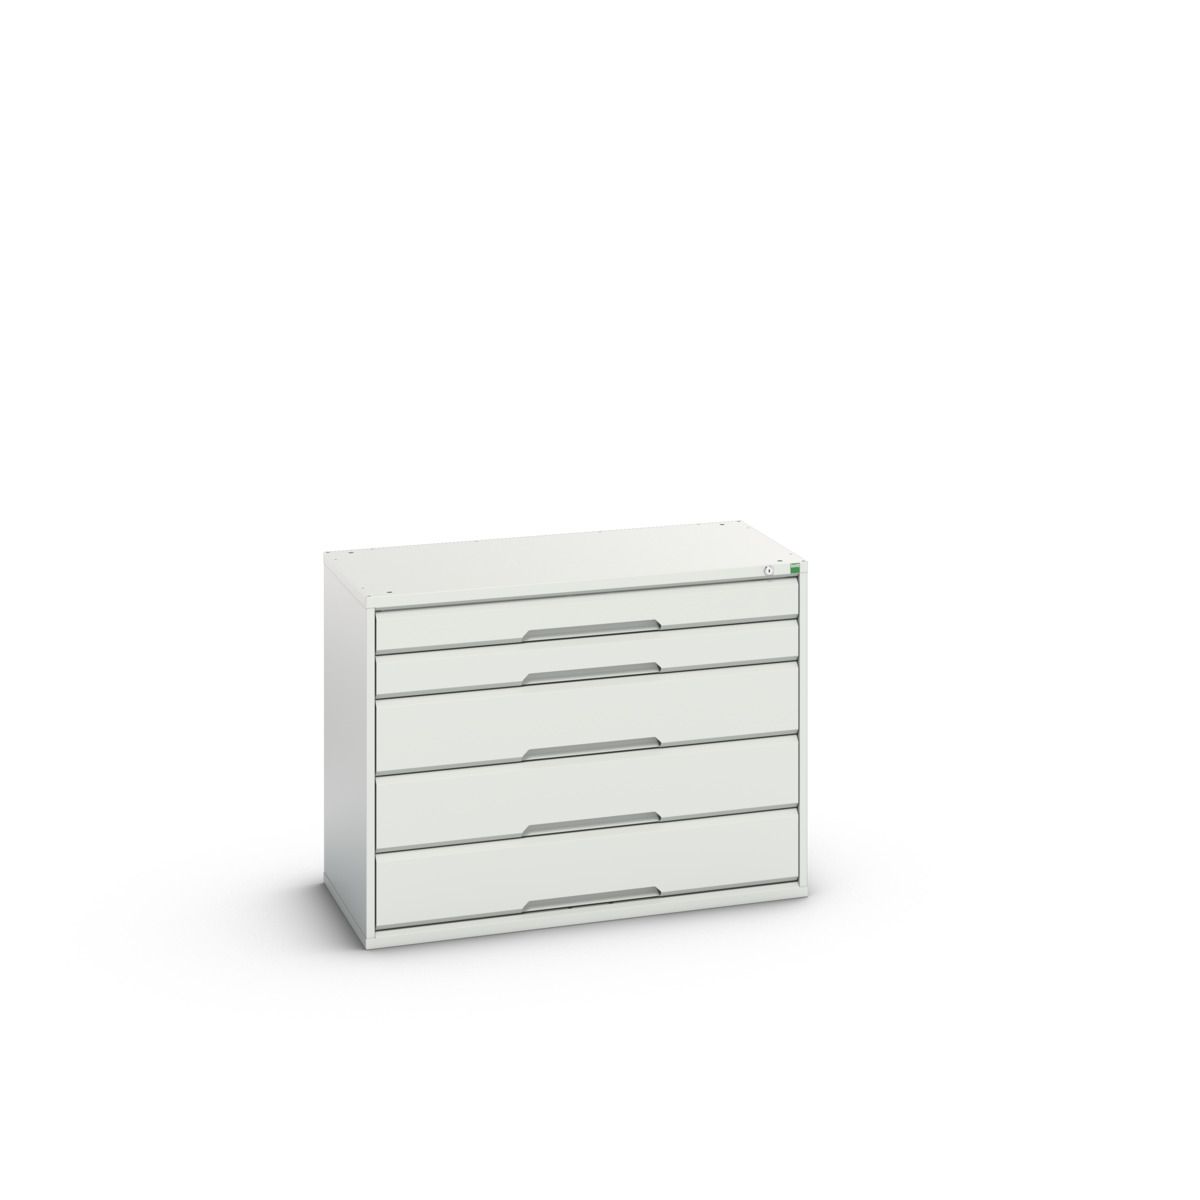 16925212.16 - verso drawer cabinet